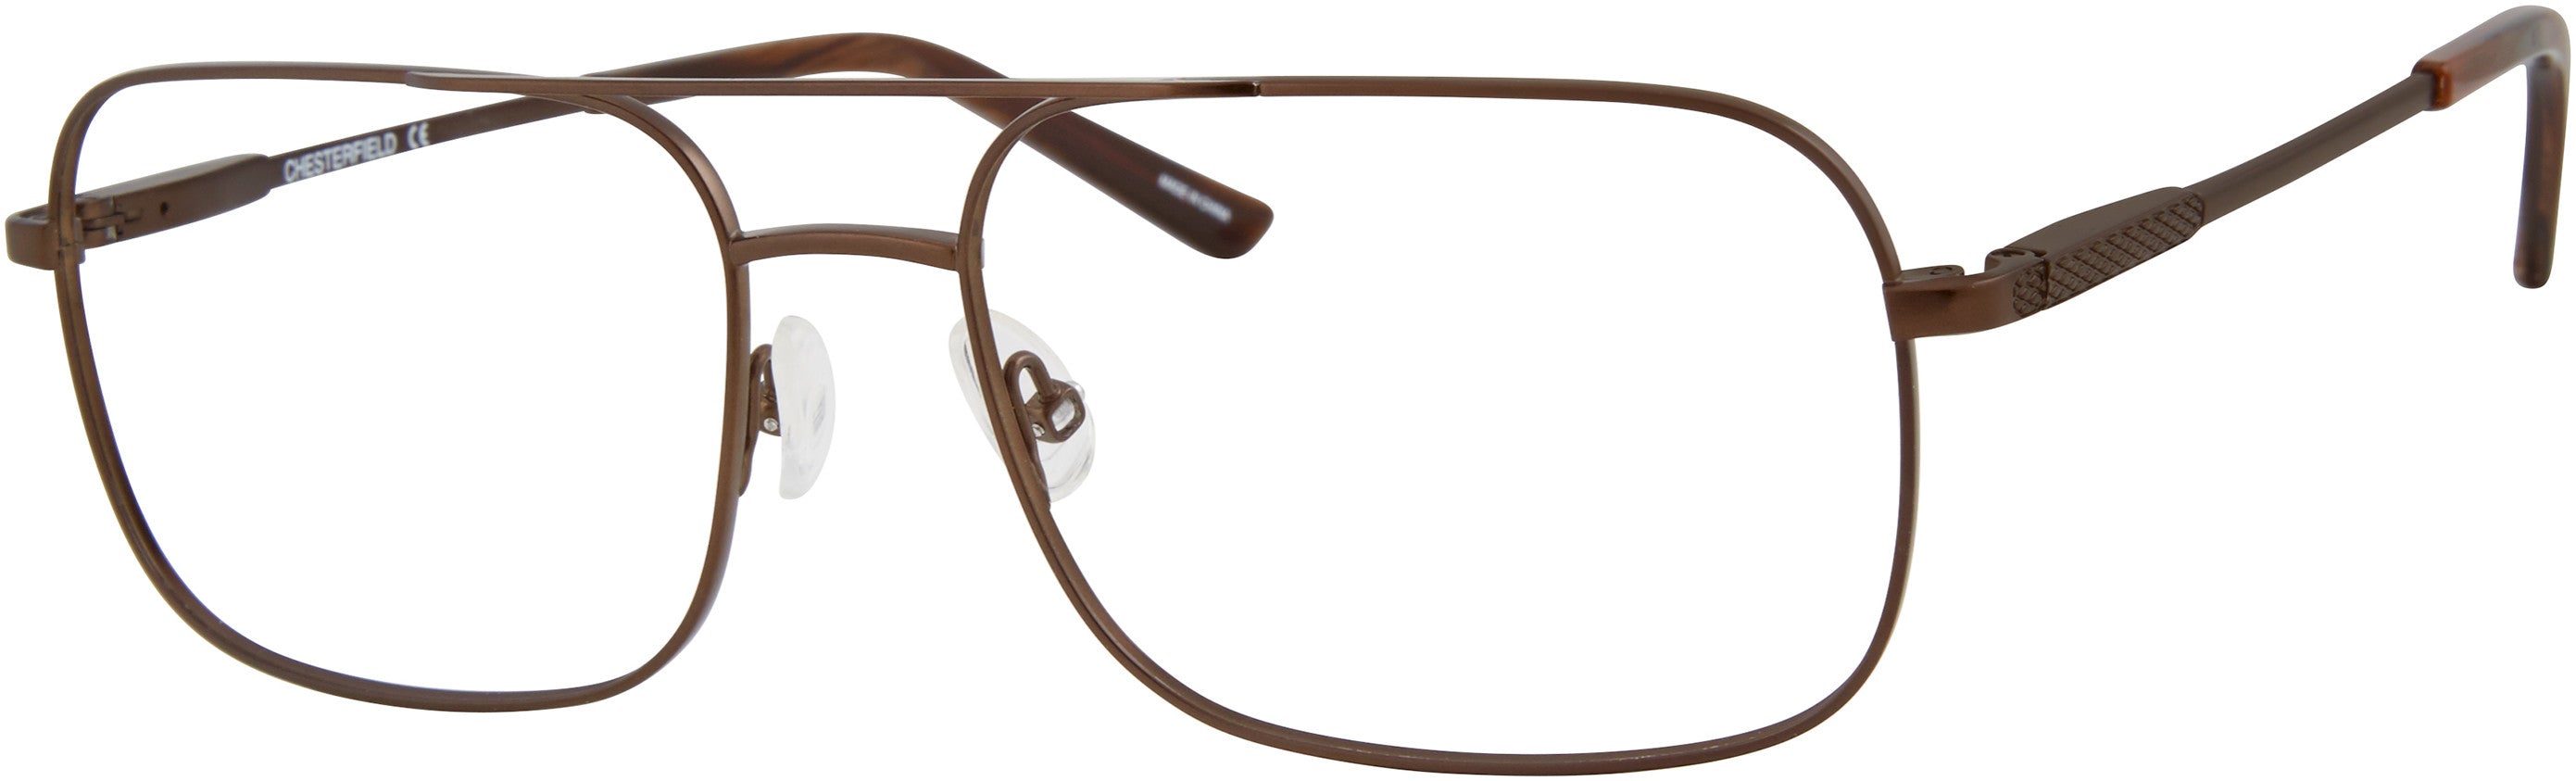  Chesterfield 74Xl/T Navigator Eyeglasses 0E62-0E62  Brushed Brown Brown (00 Demo Lens)